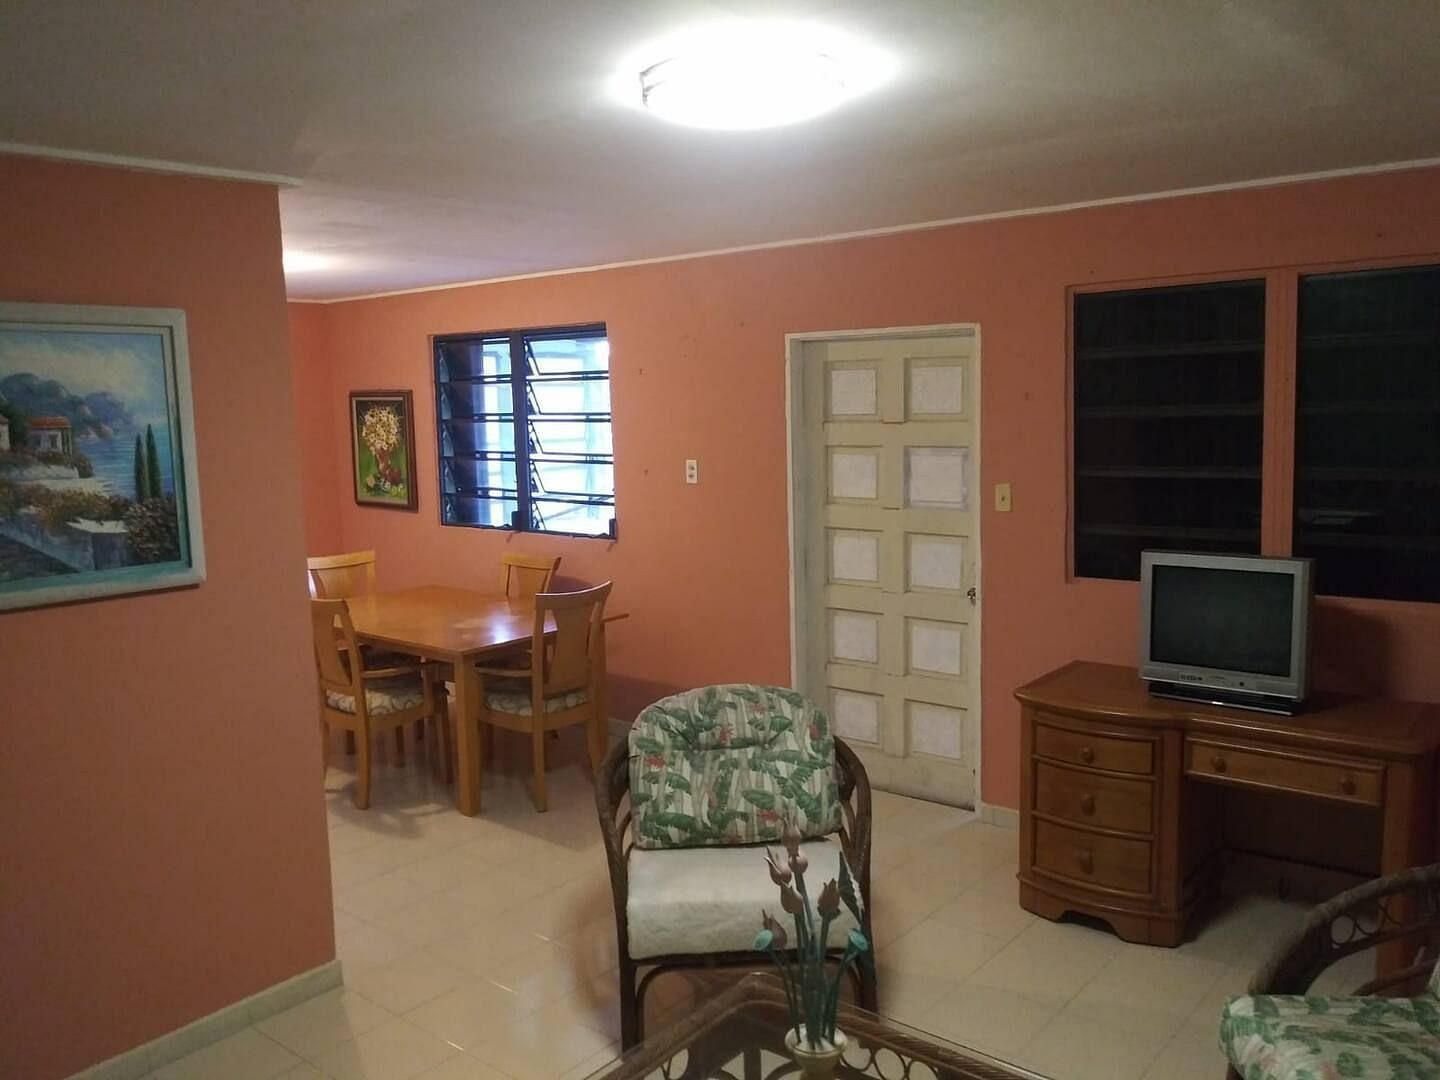 JWguest Rental unit at San Juan, San Juan | LasLomas 1A Studio Room Upstairs #1 | Jwbnb no brobnb 1